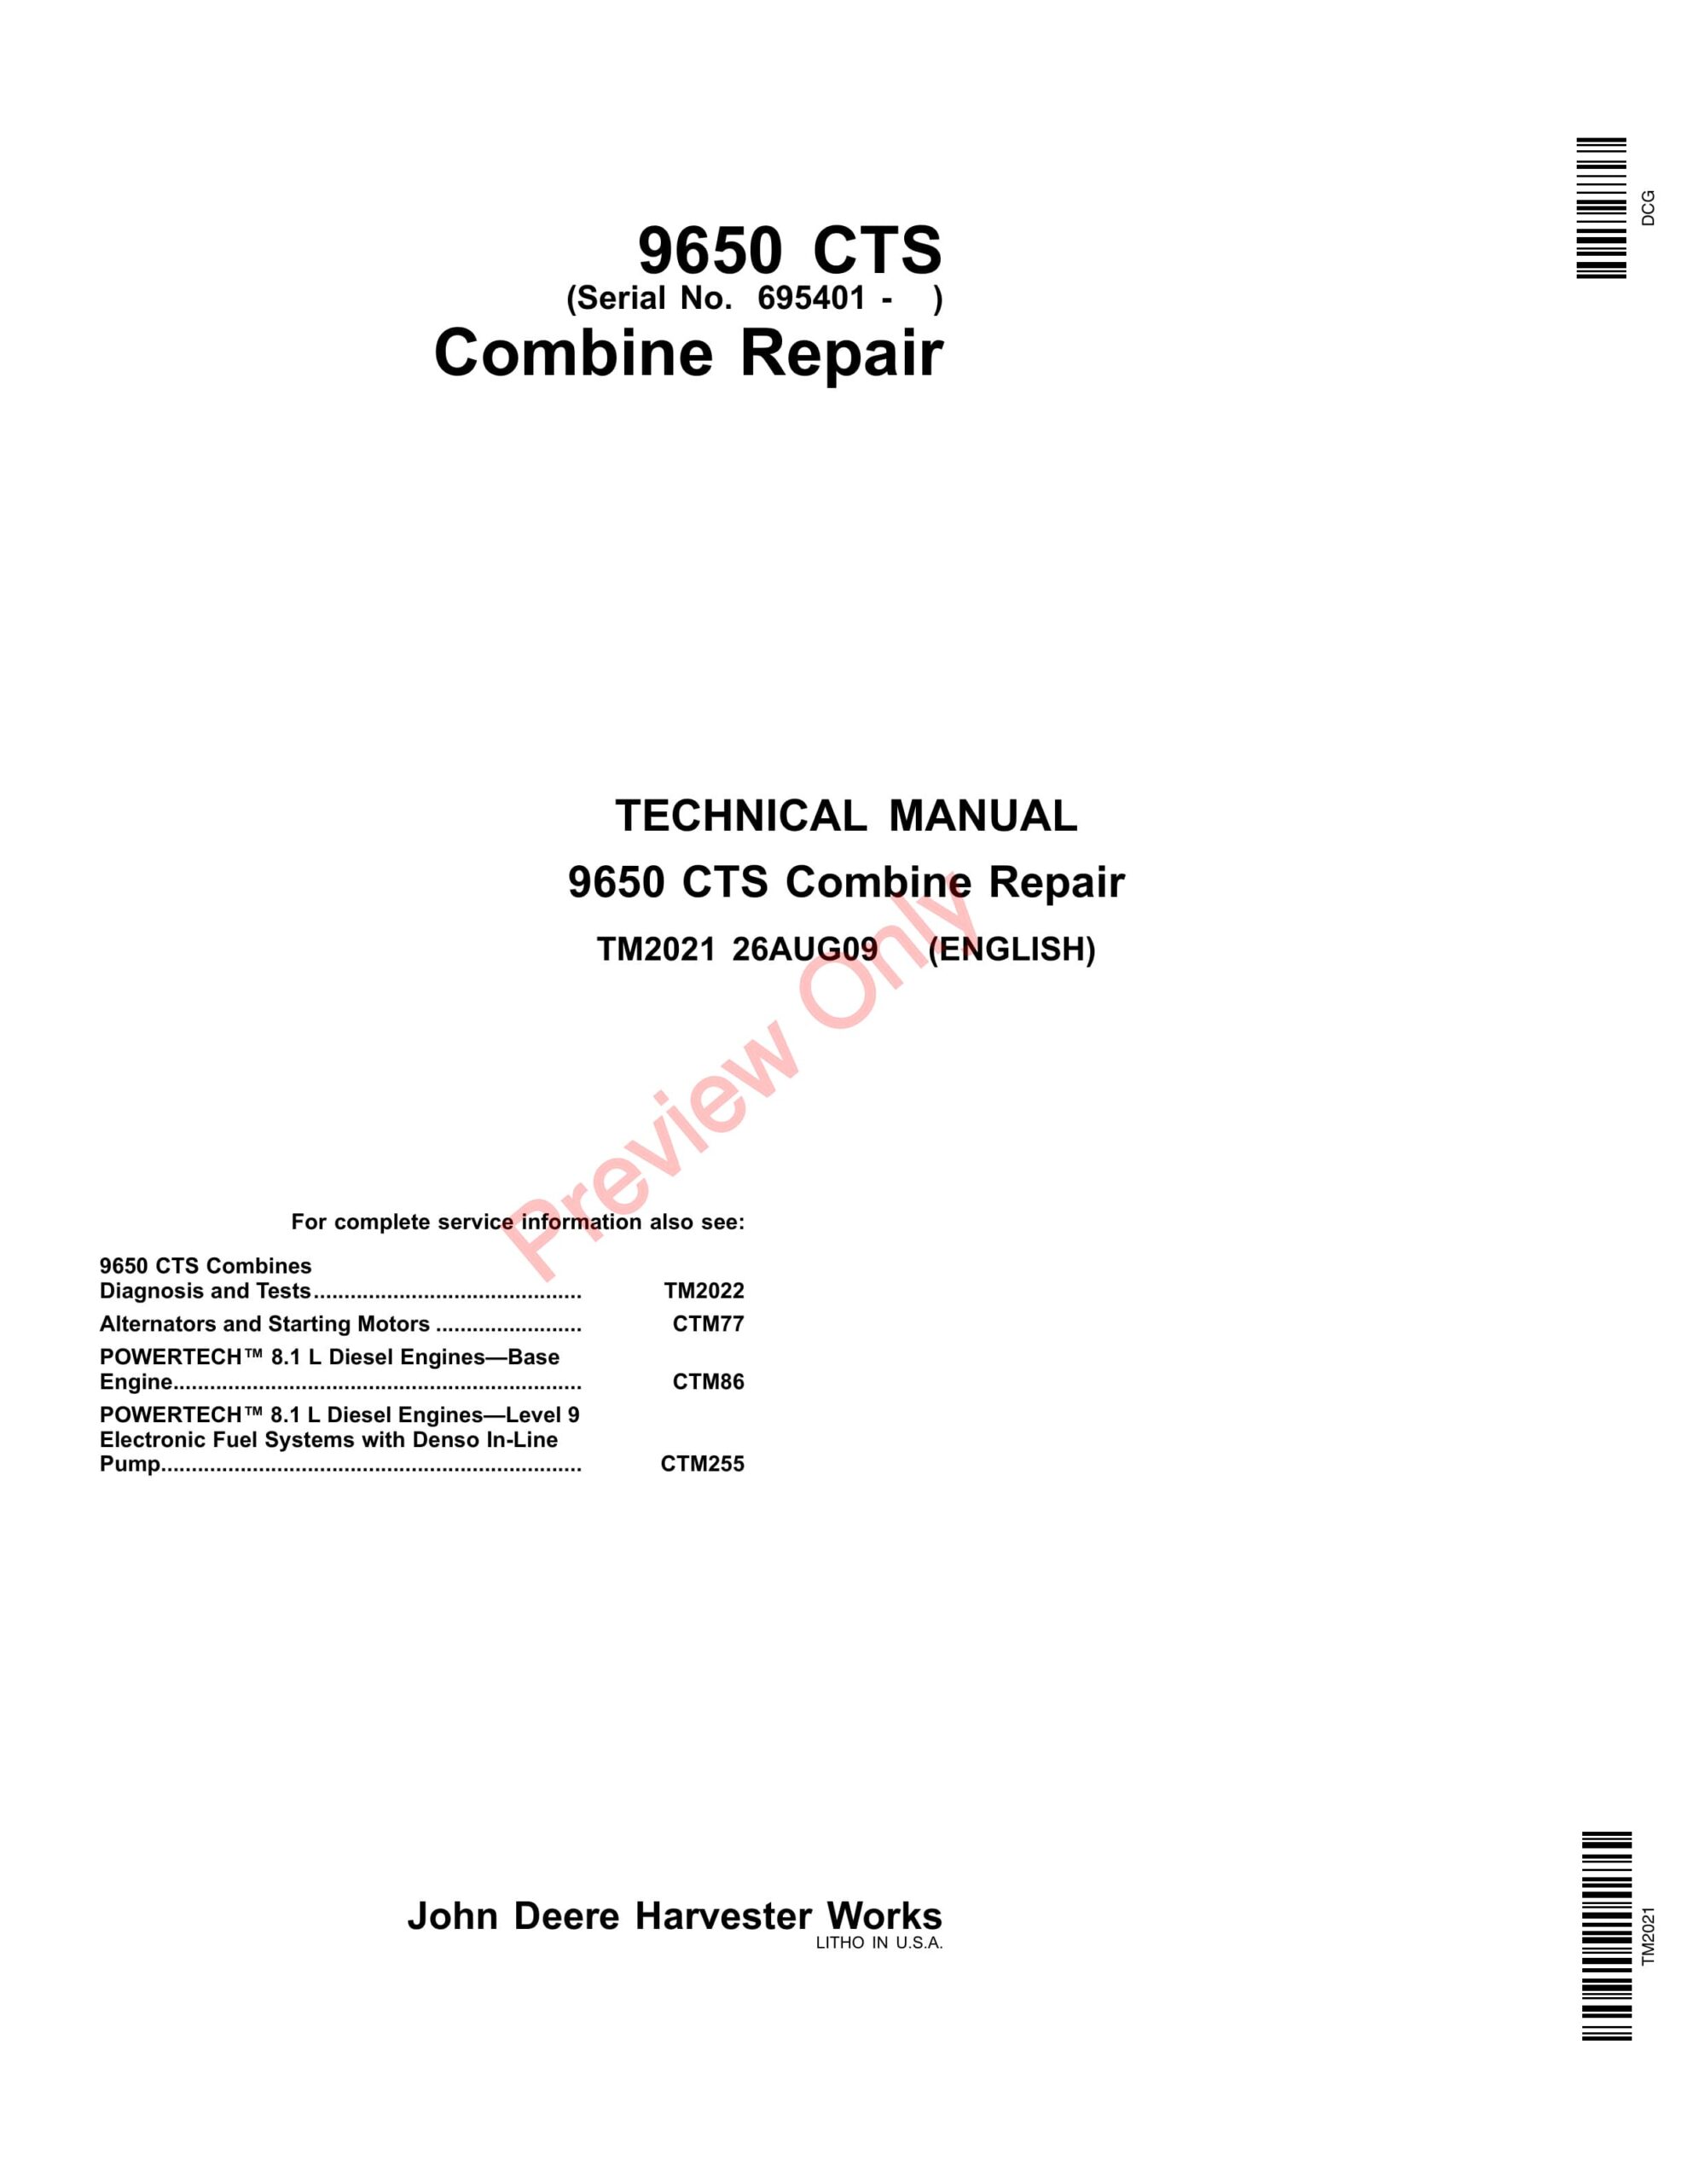 John Deere 9650 CTS Combine Technical Manual TM2021 26AUG09-1